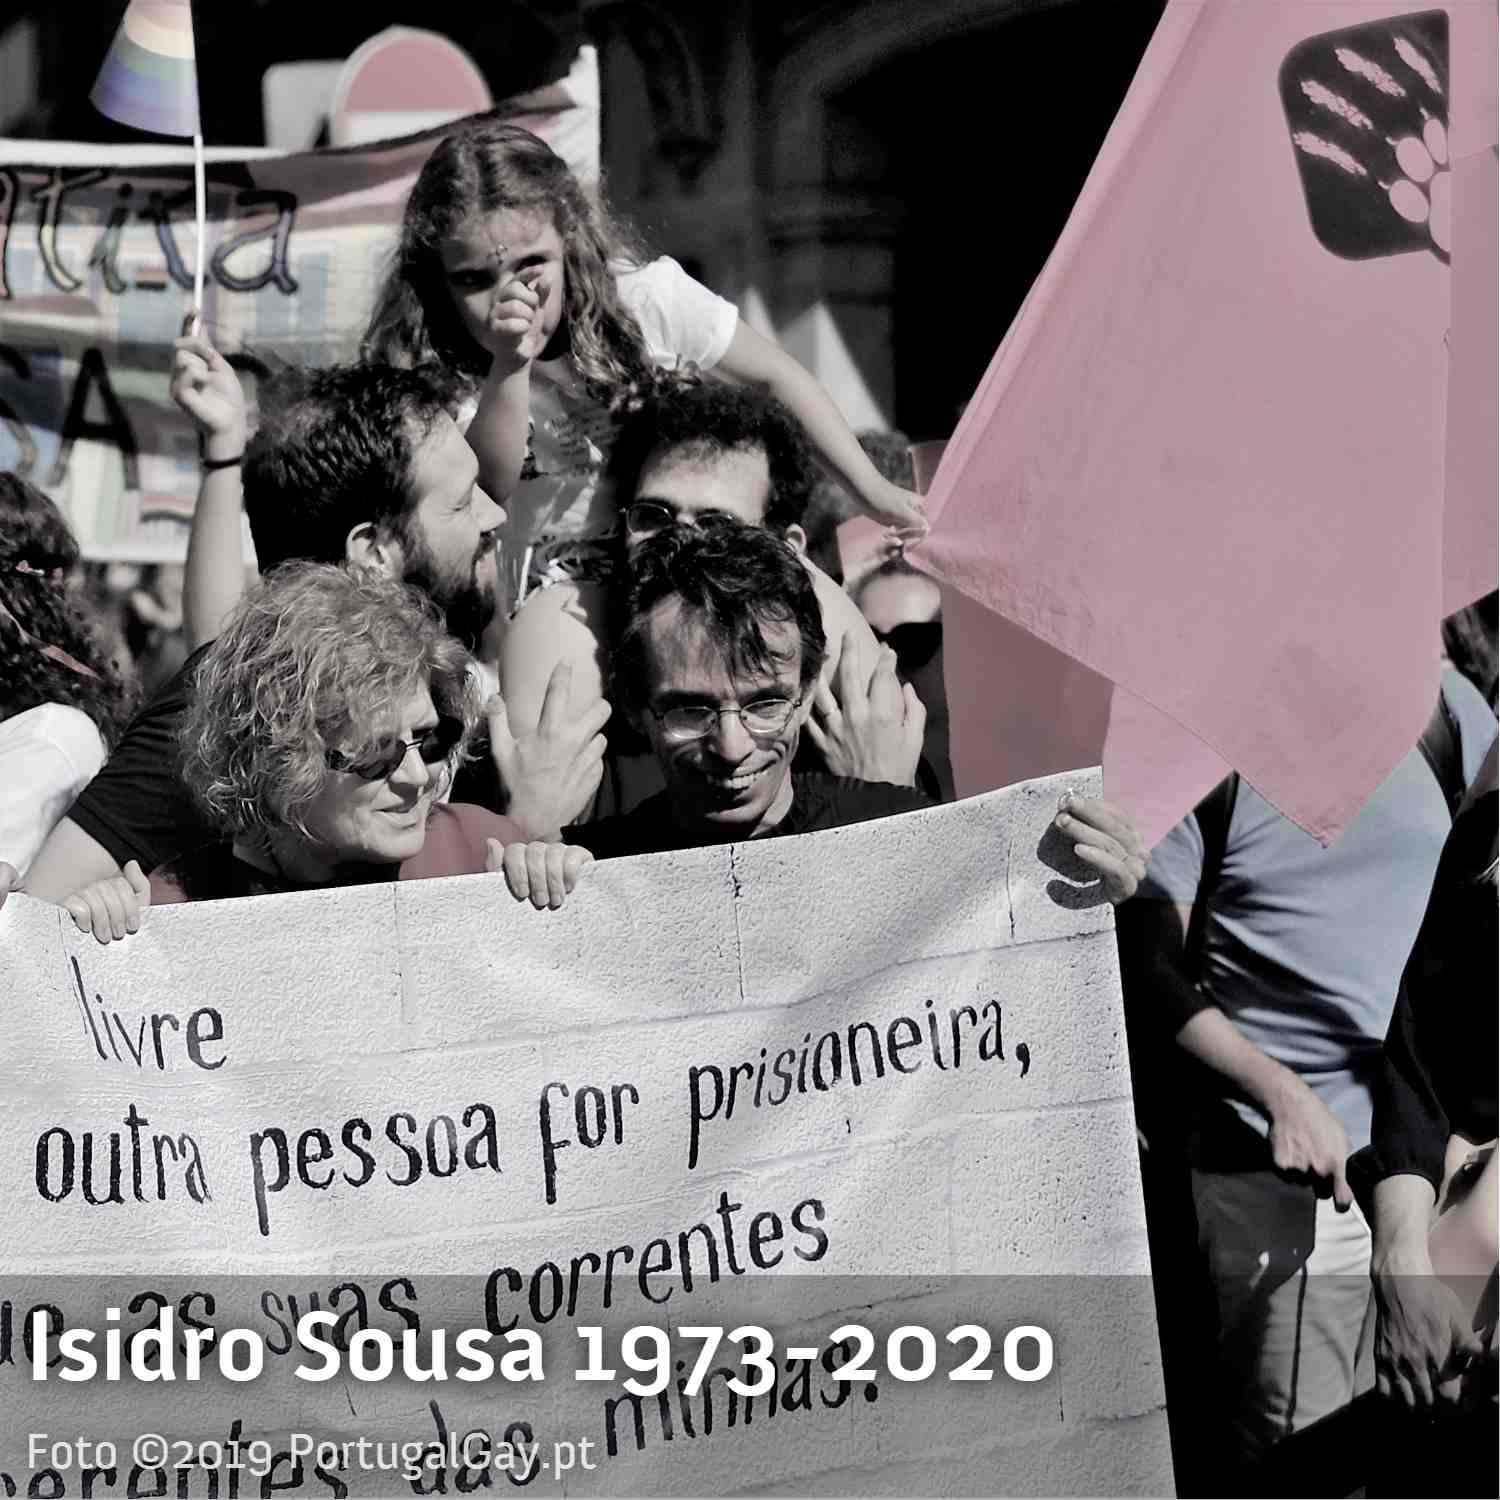 PORTUGAL: Isidro Sousa 1973 - 2020